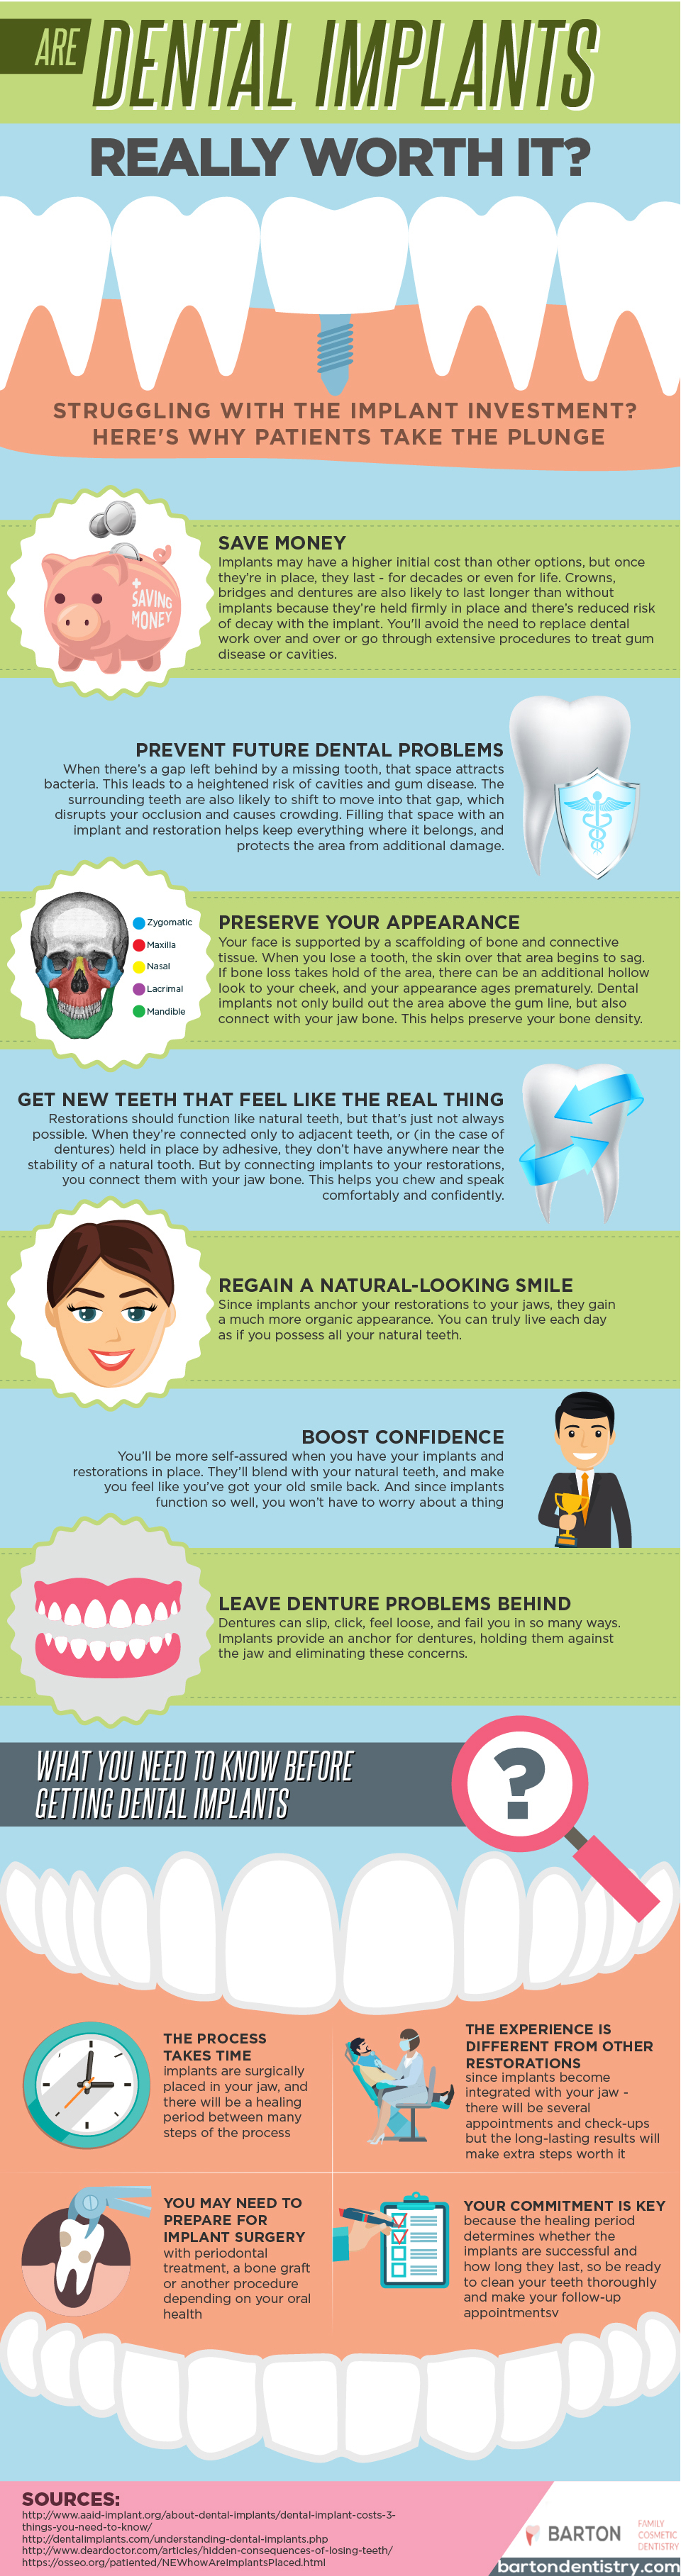 Dalton dental implants infographic